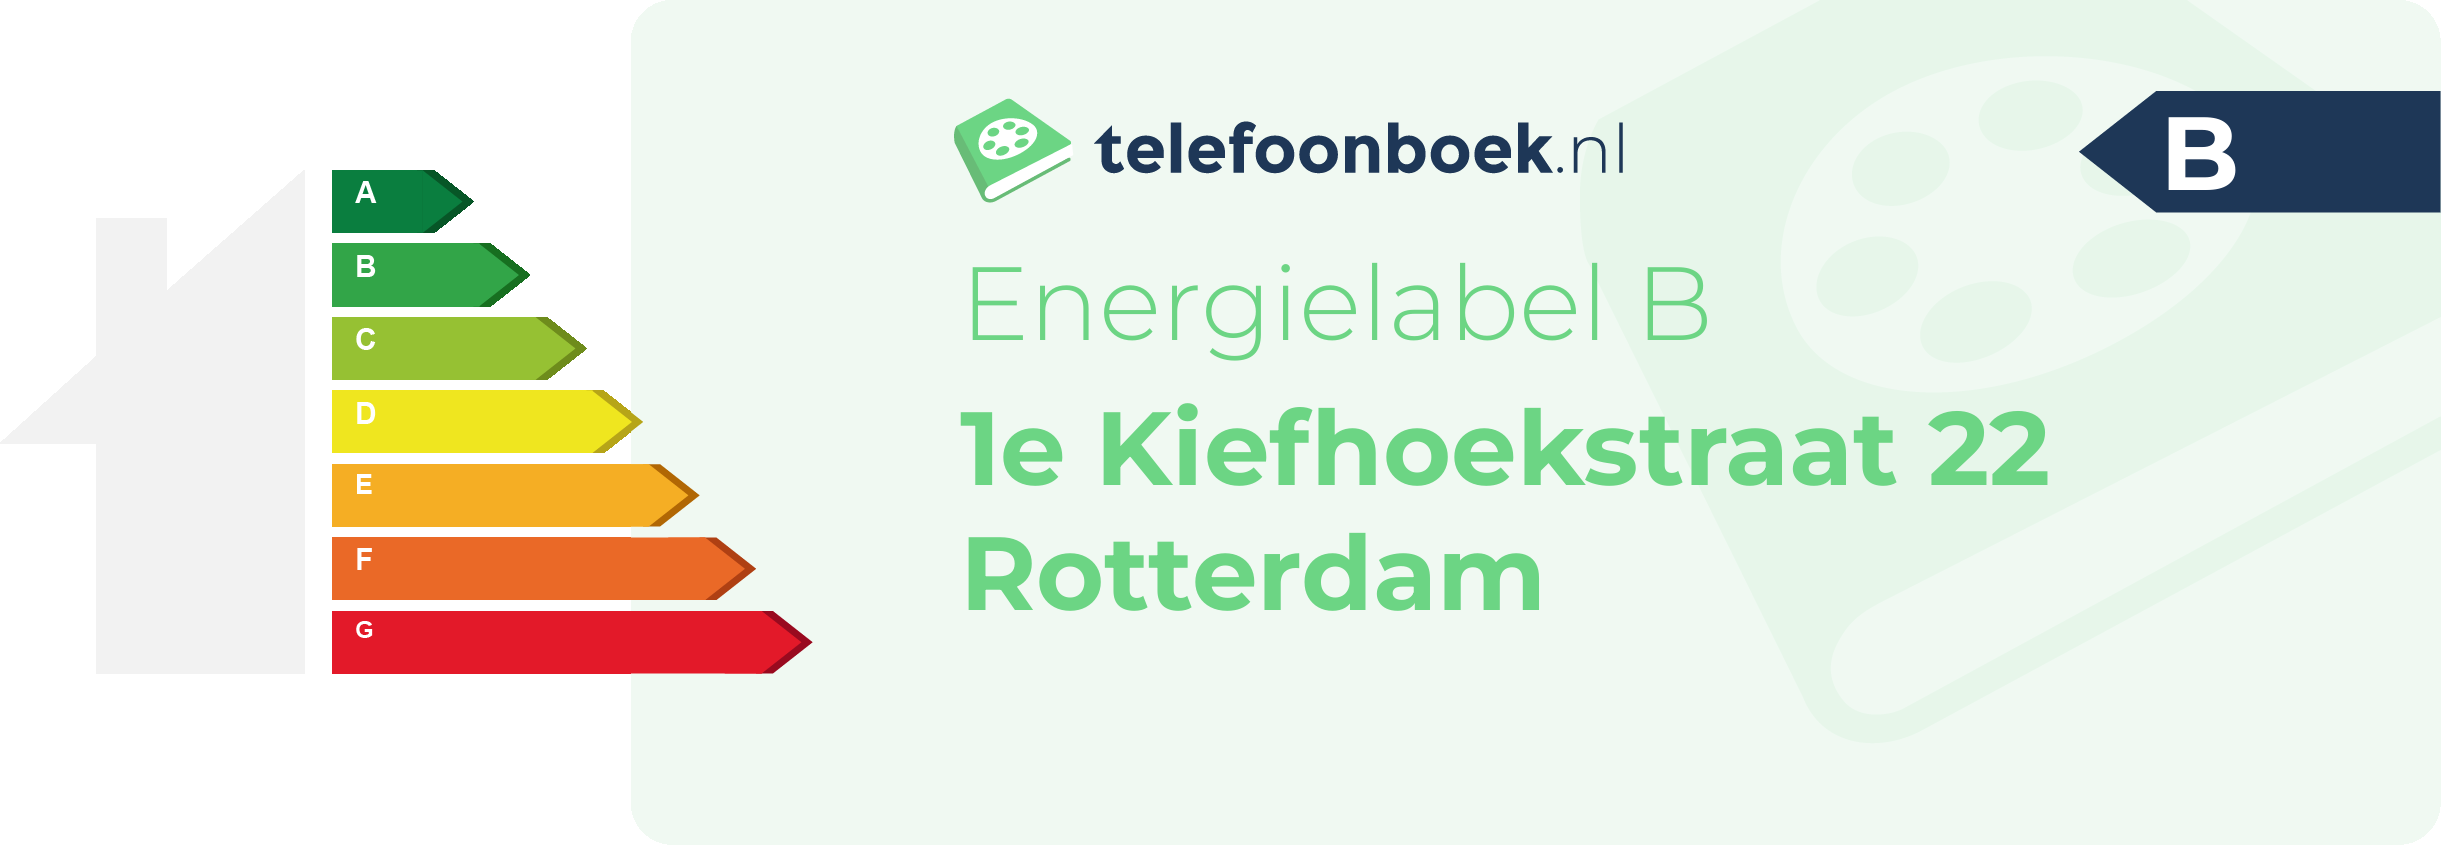 Energielabel 1e Kiefhoekstraat 22 Rotterdam